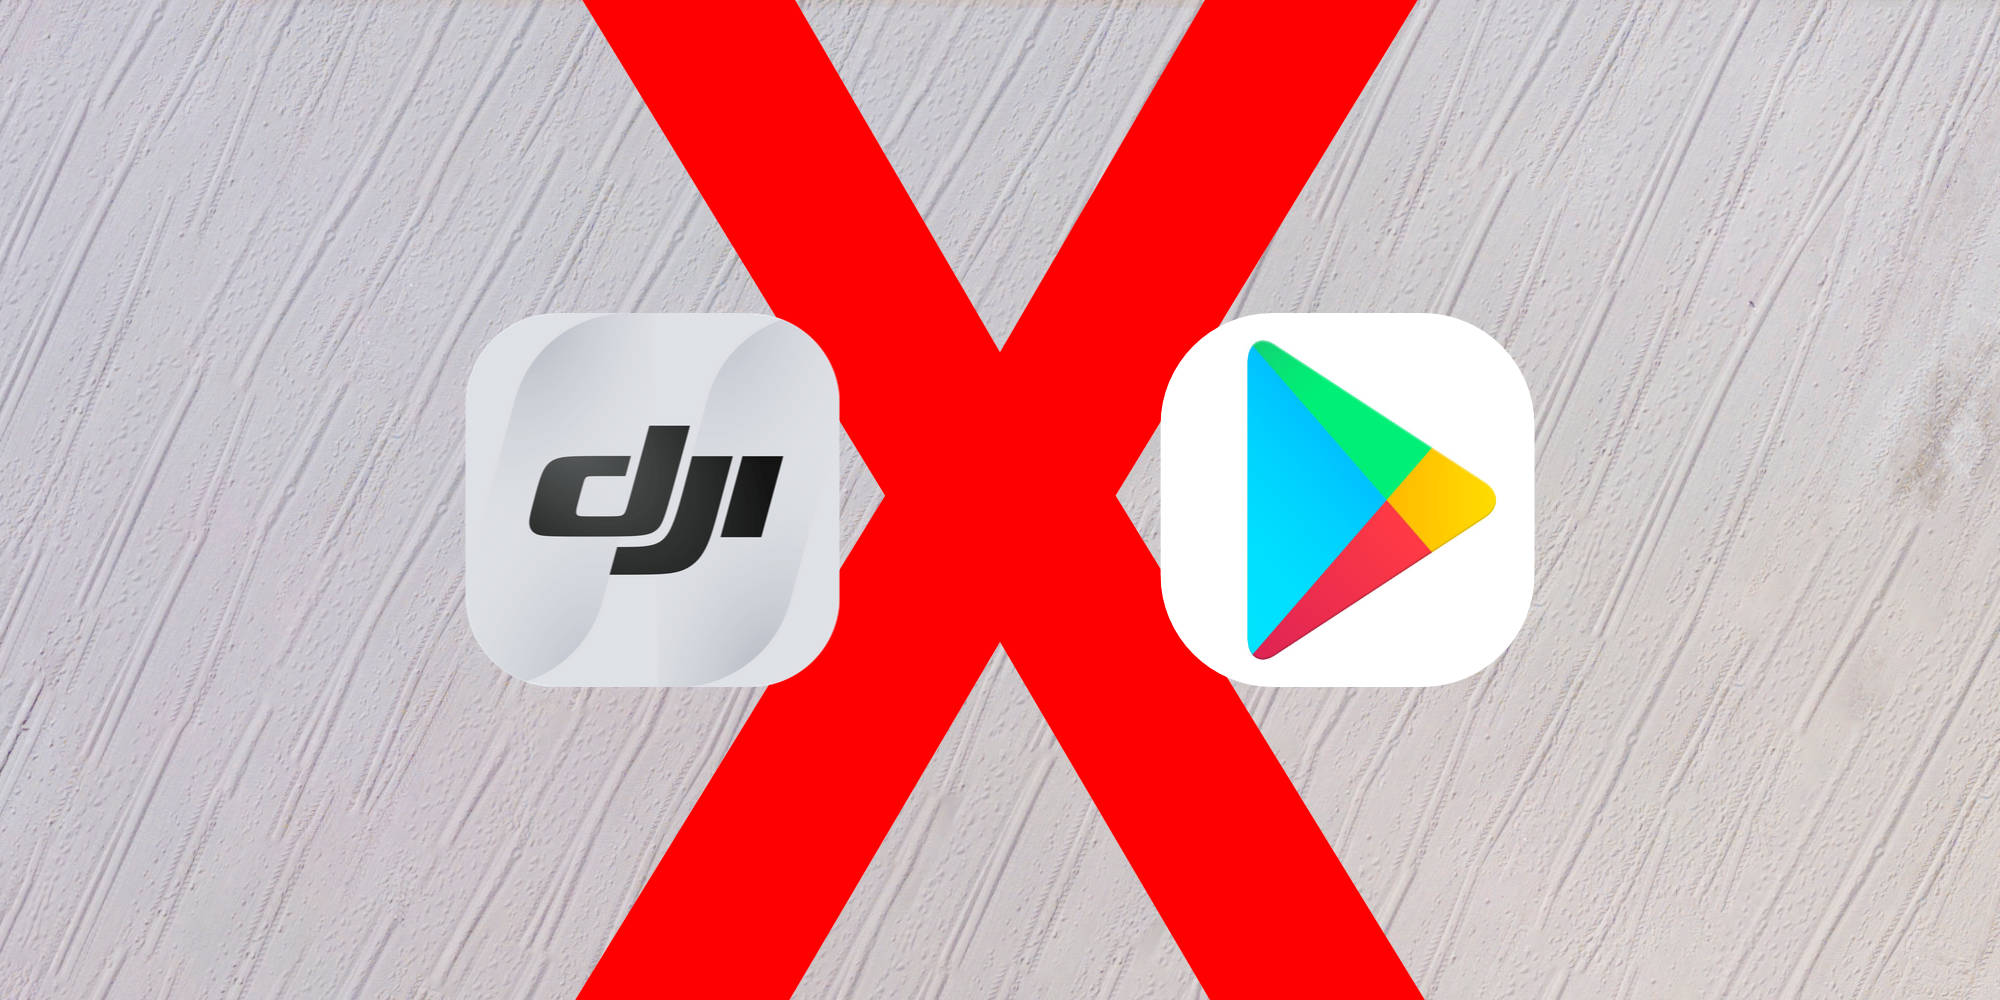 Приложение dji fly на русском. DJI приложение. DJI Fly андроид. DJI Fly app. DJI приложение для Android.